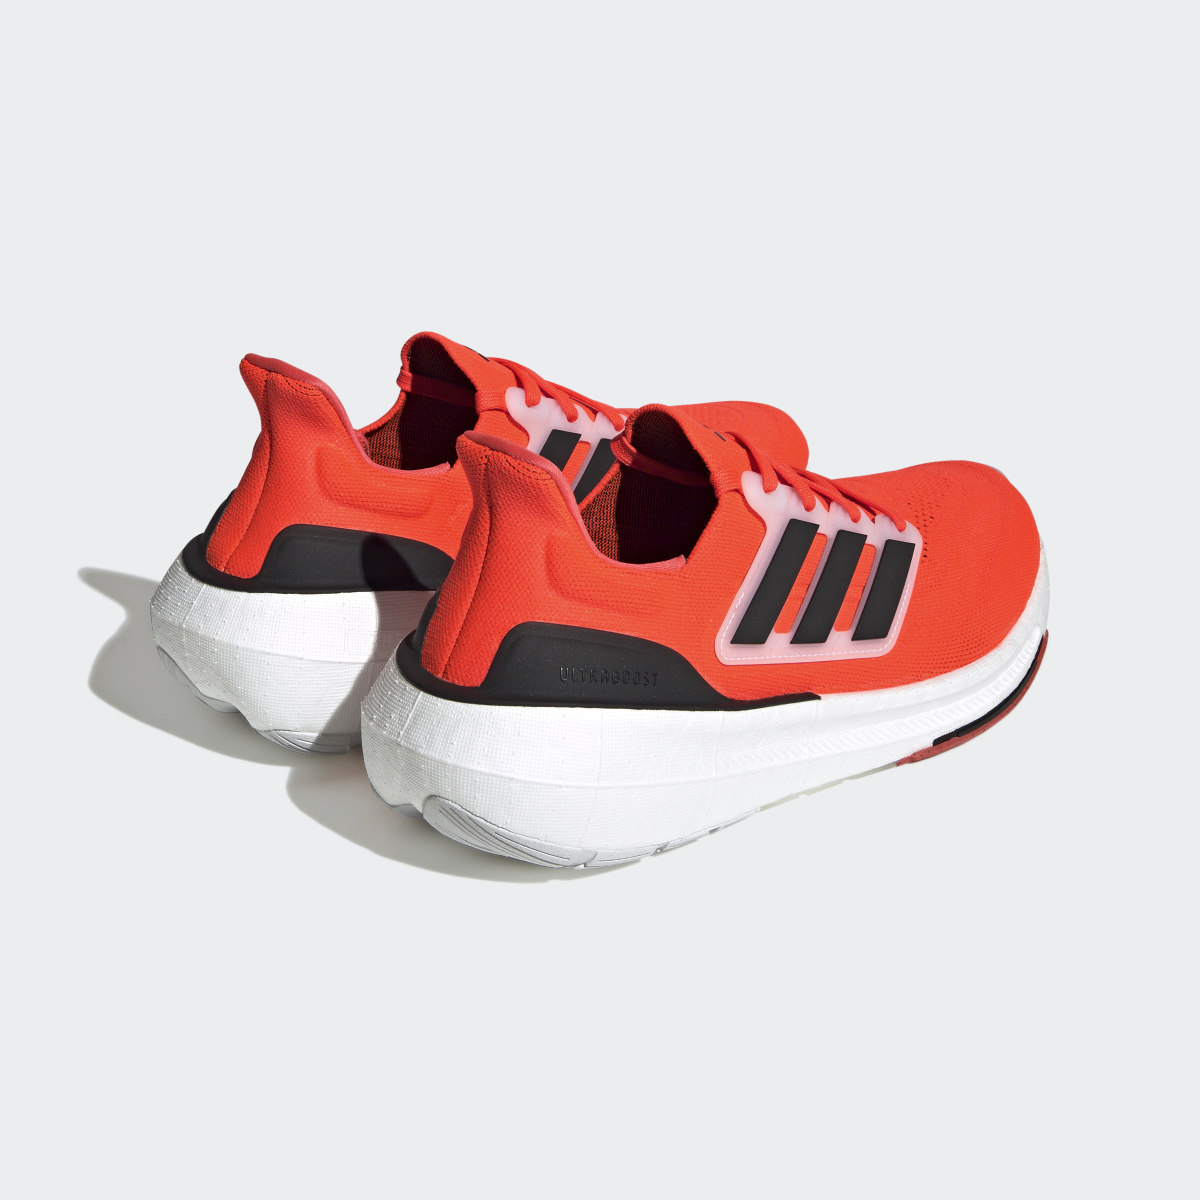 Adidas Ultraboost Light Ayakkabı. 6